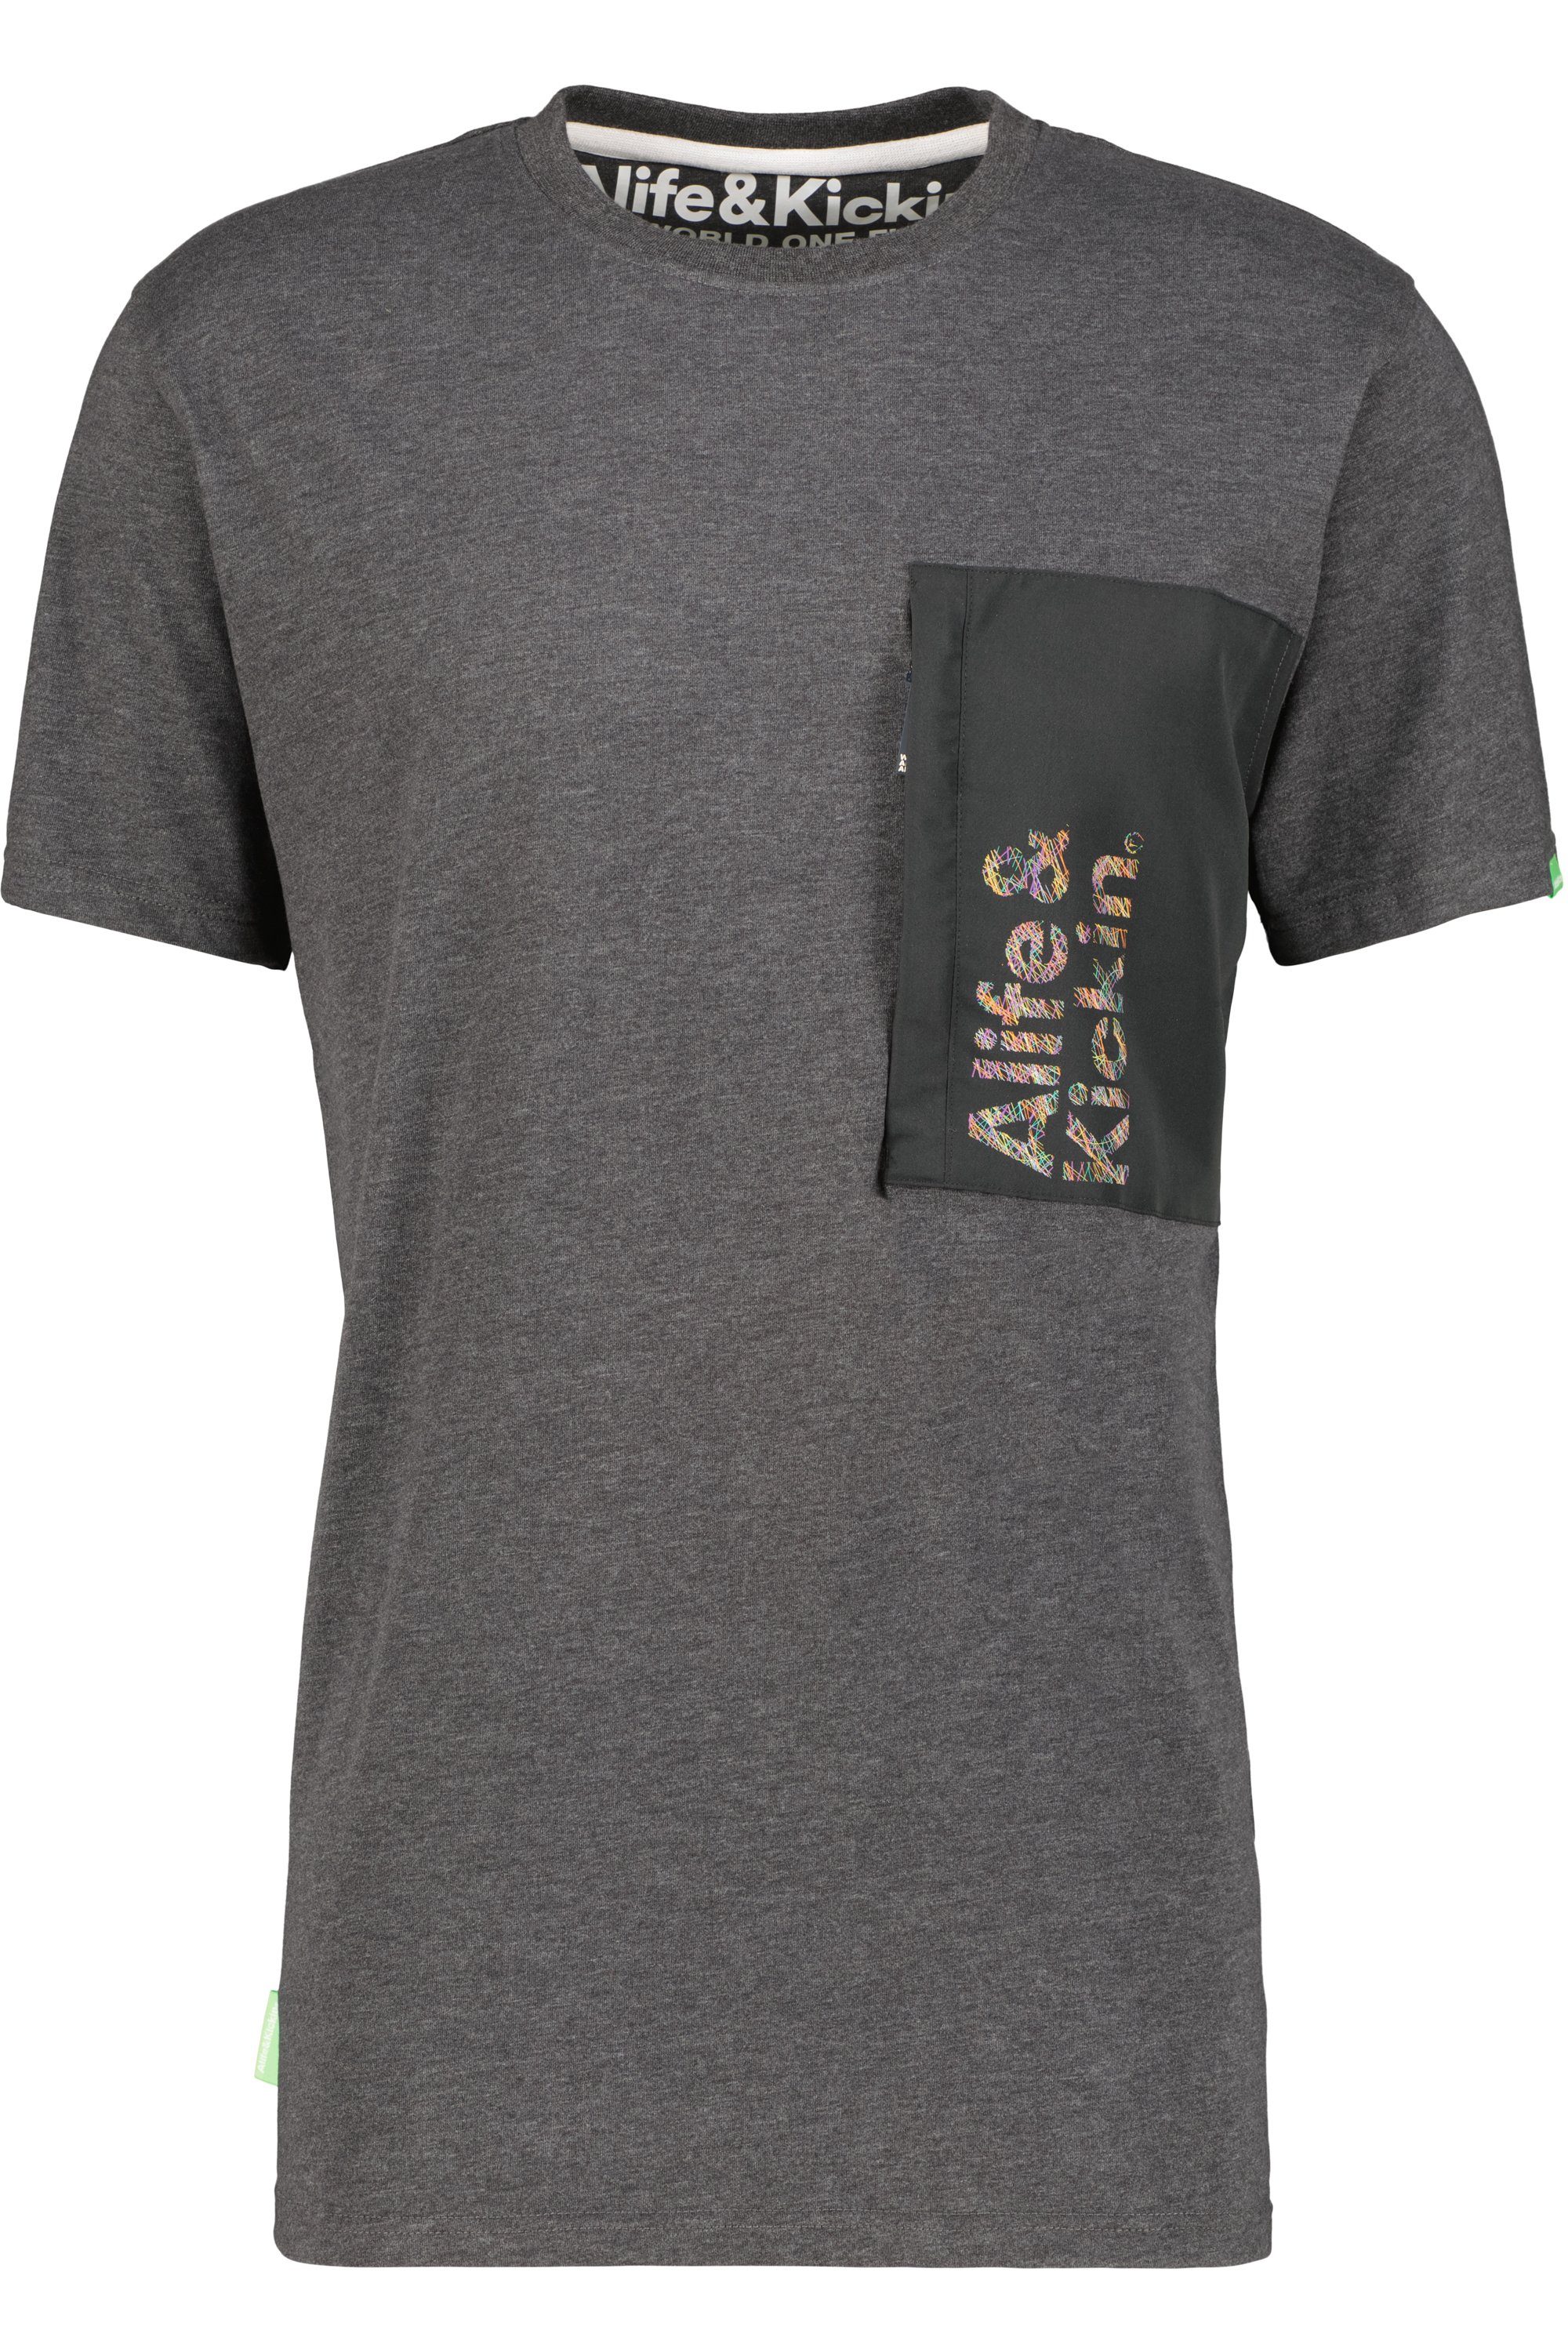 RossAK Alife Kickin Herren Shirt T-Shirt moonless T-Shirt &